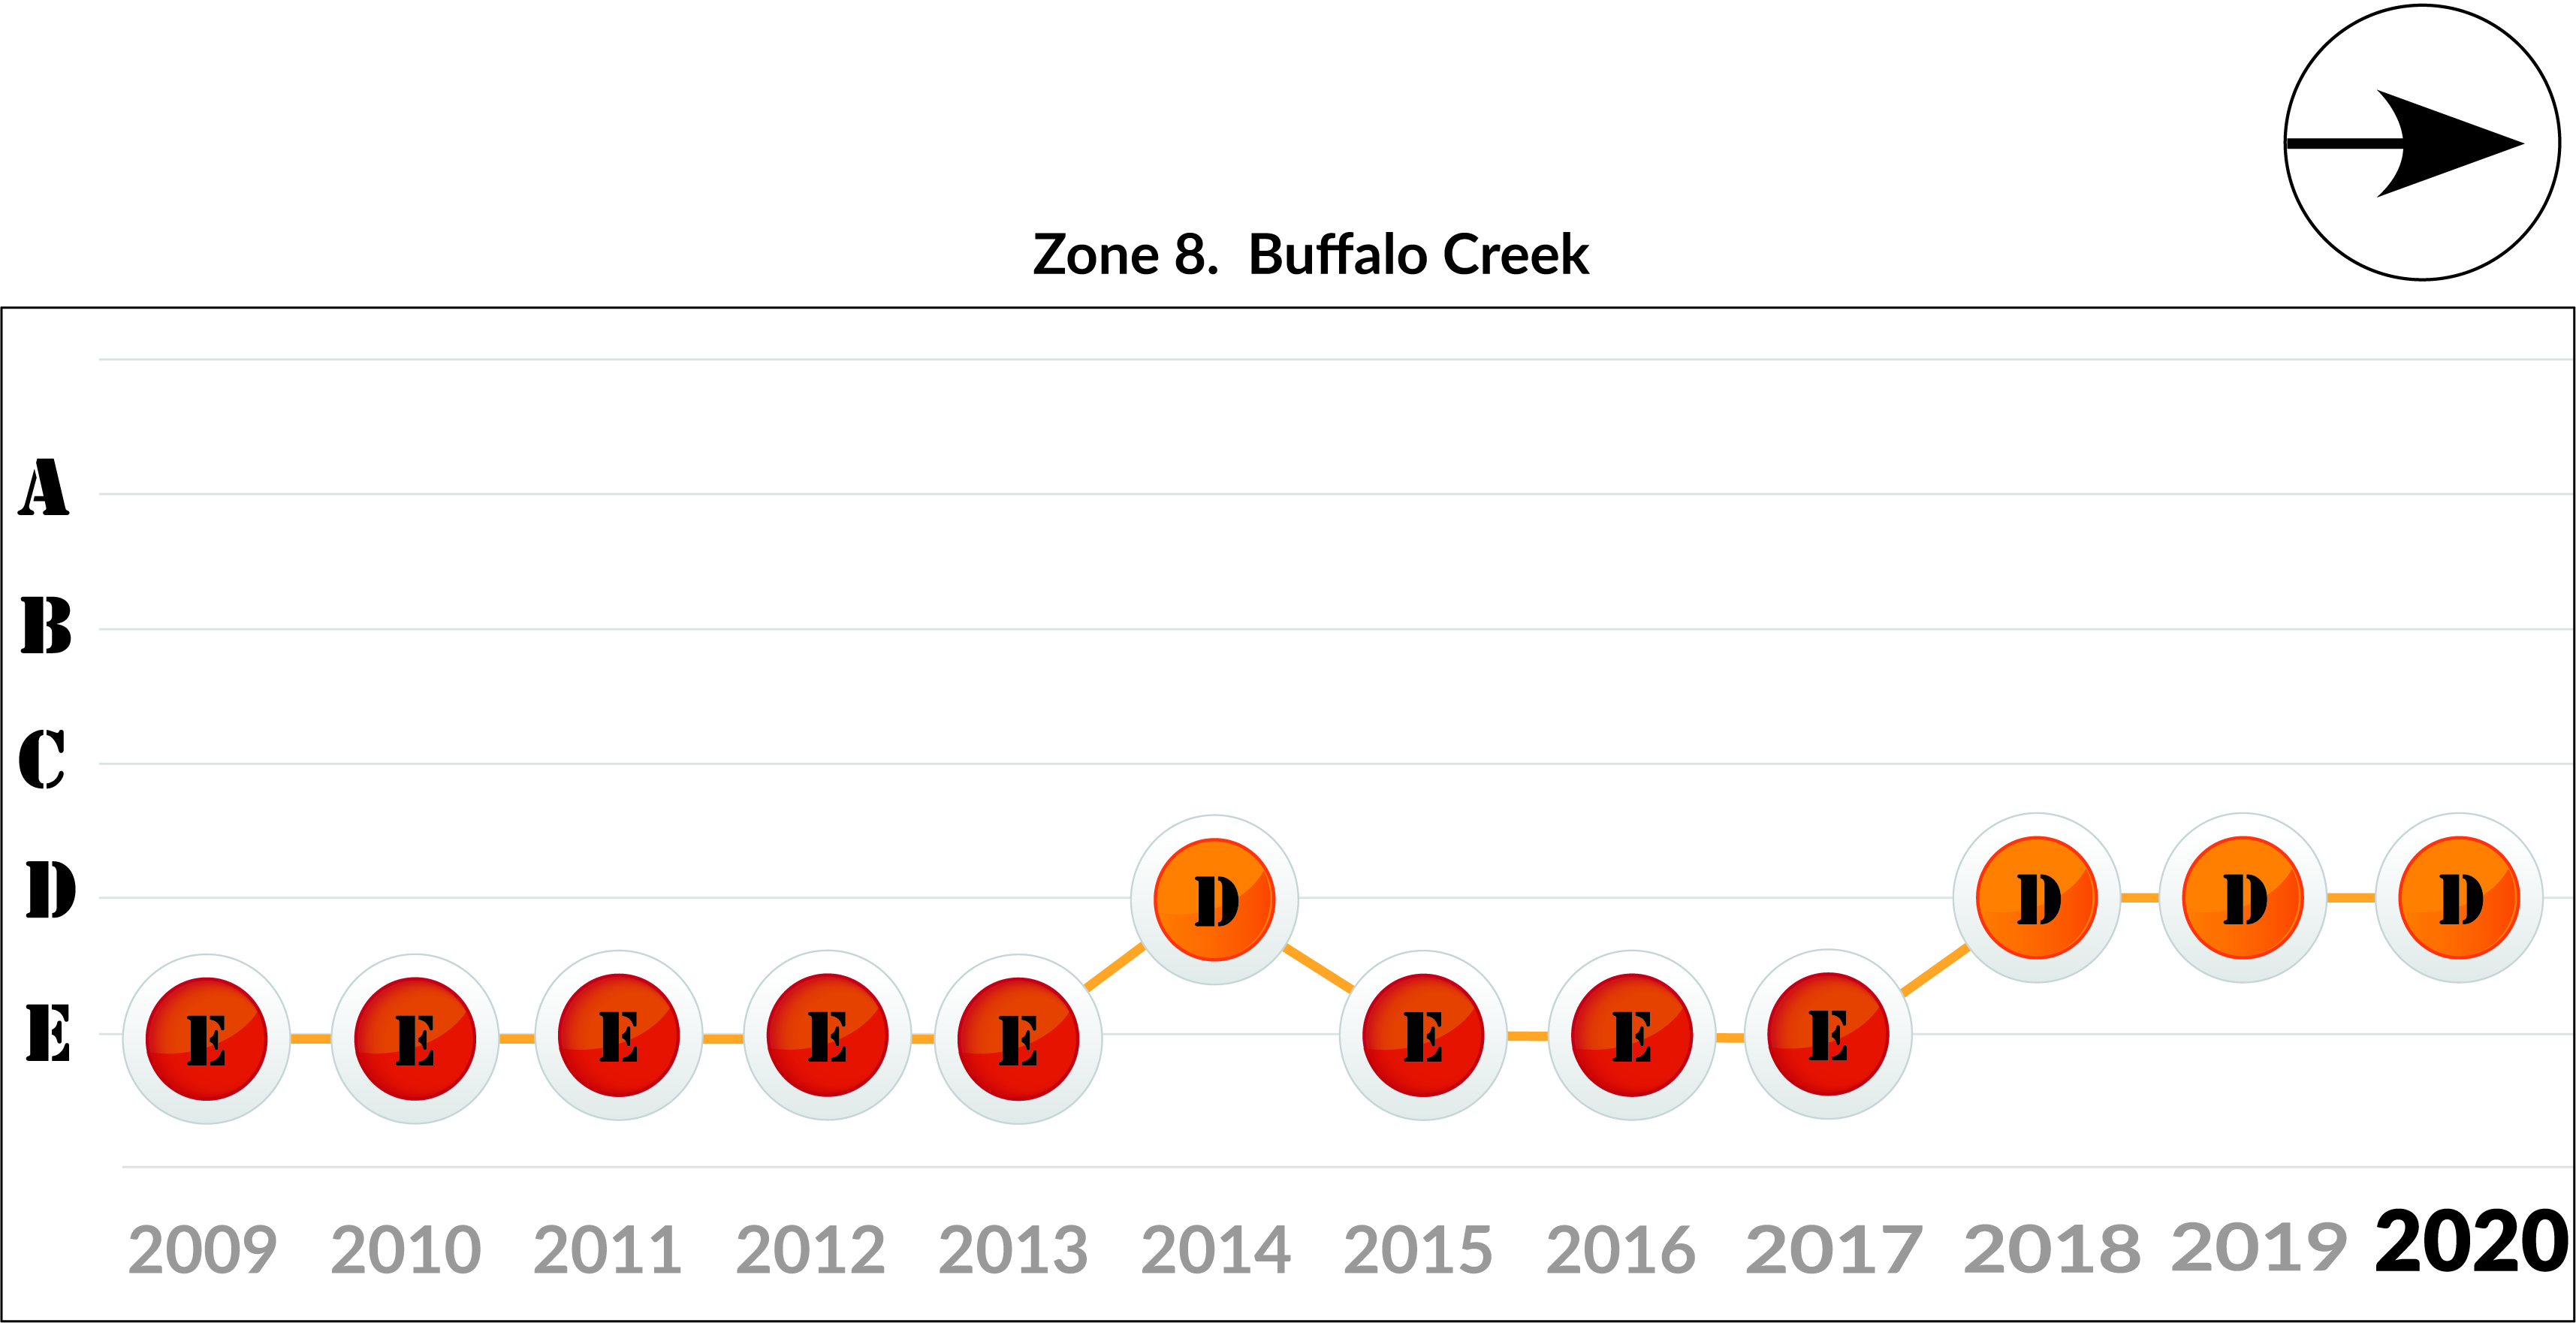 Zone 8 - Buffalo Creek trend 2020